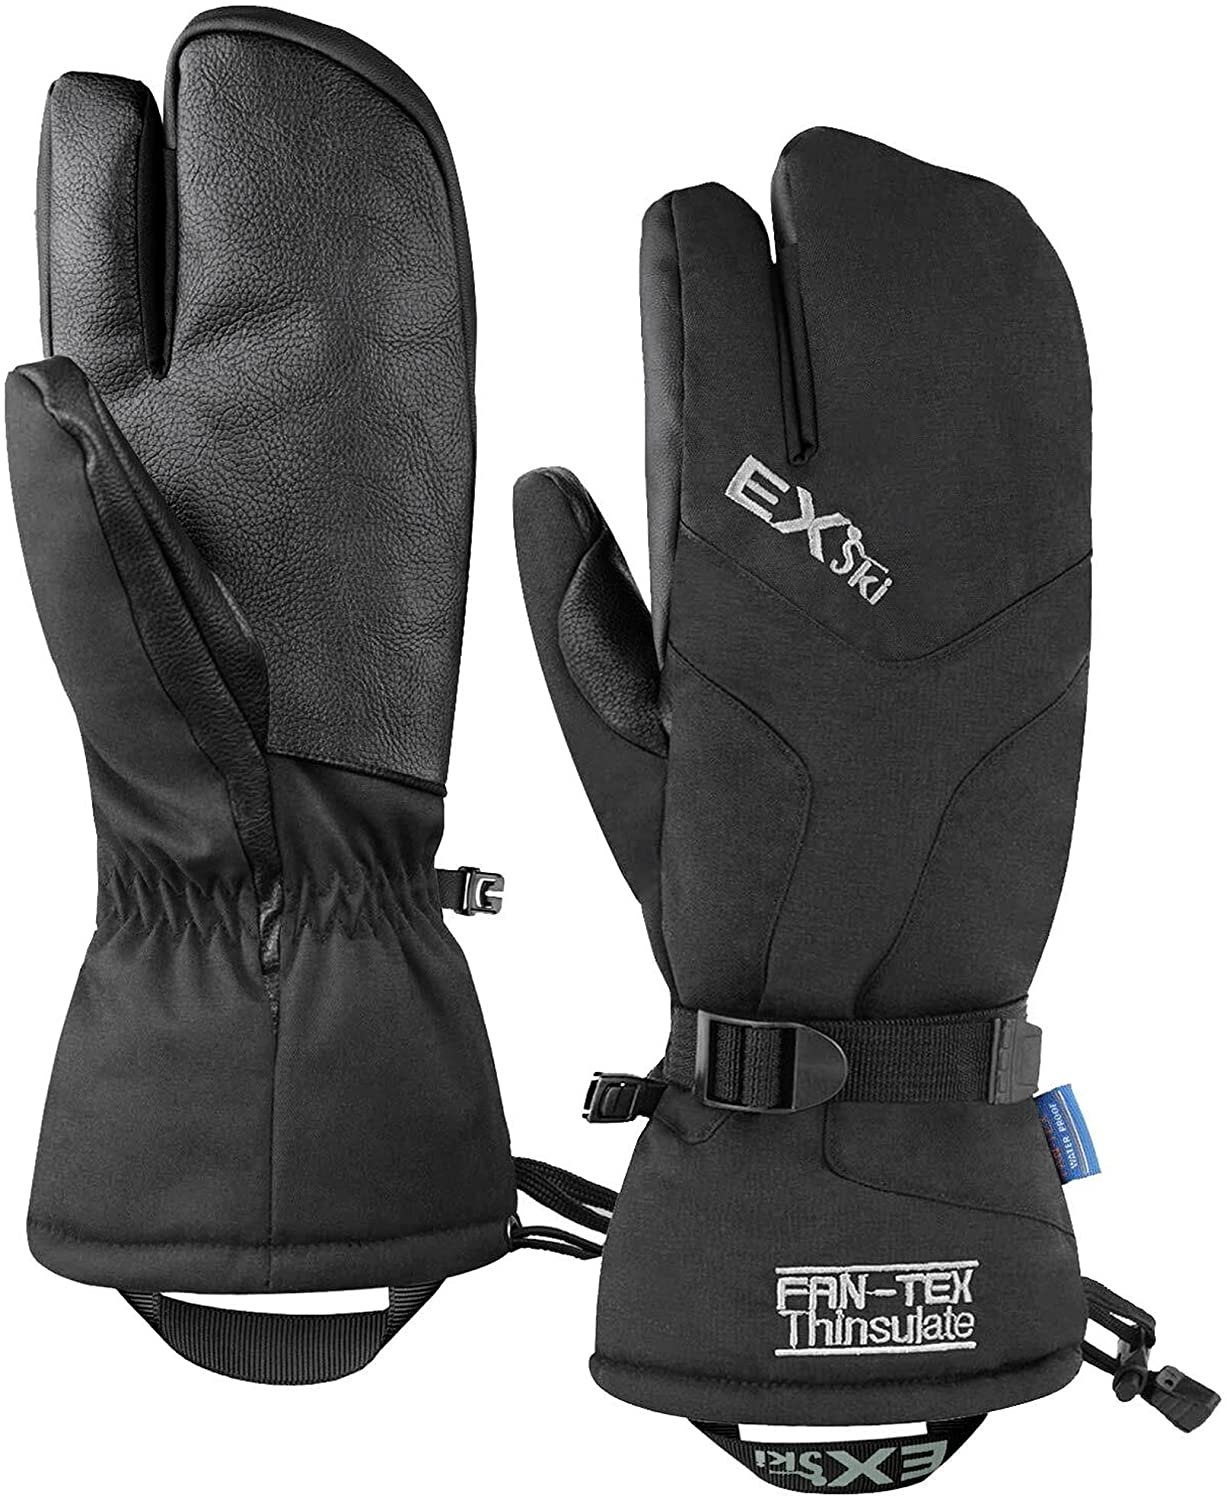 Daskoo Skihandschuhe Winter Fahrrad Handschuhe Winterhandschuhe (Pack) Ski Wasserdicht Stil 1 schwarz